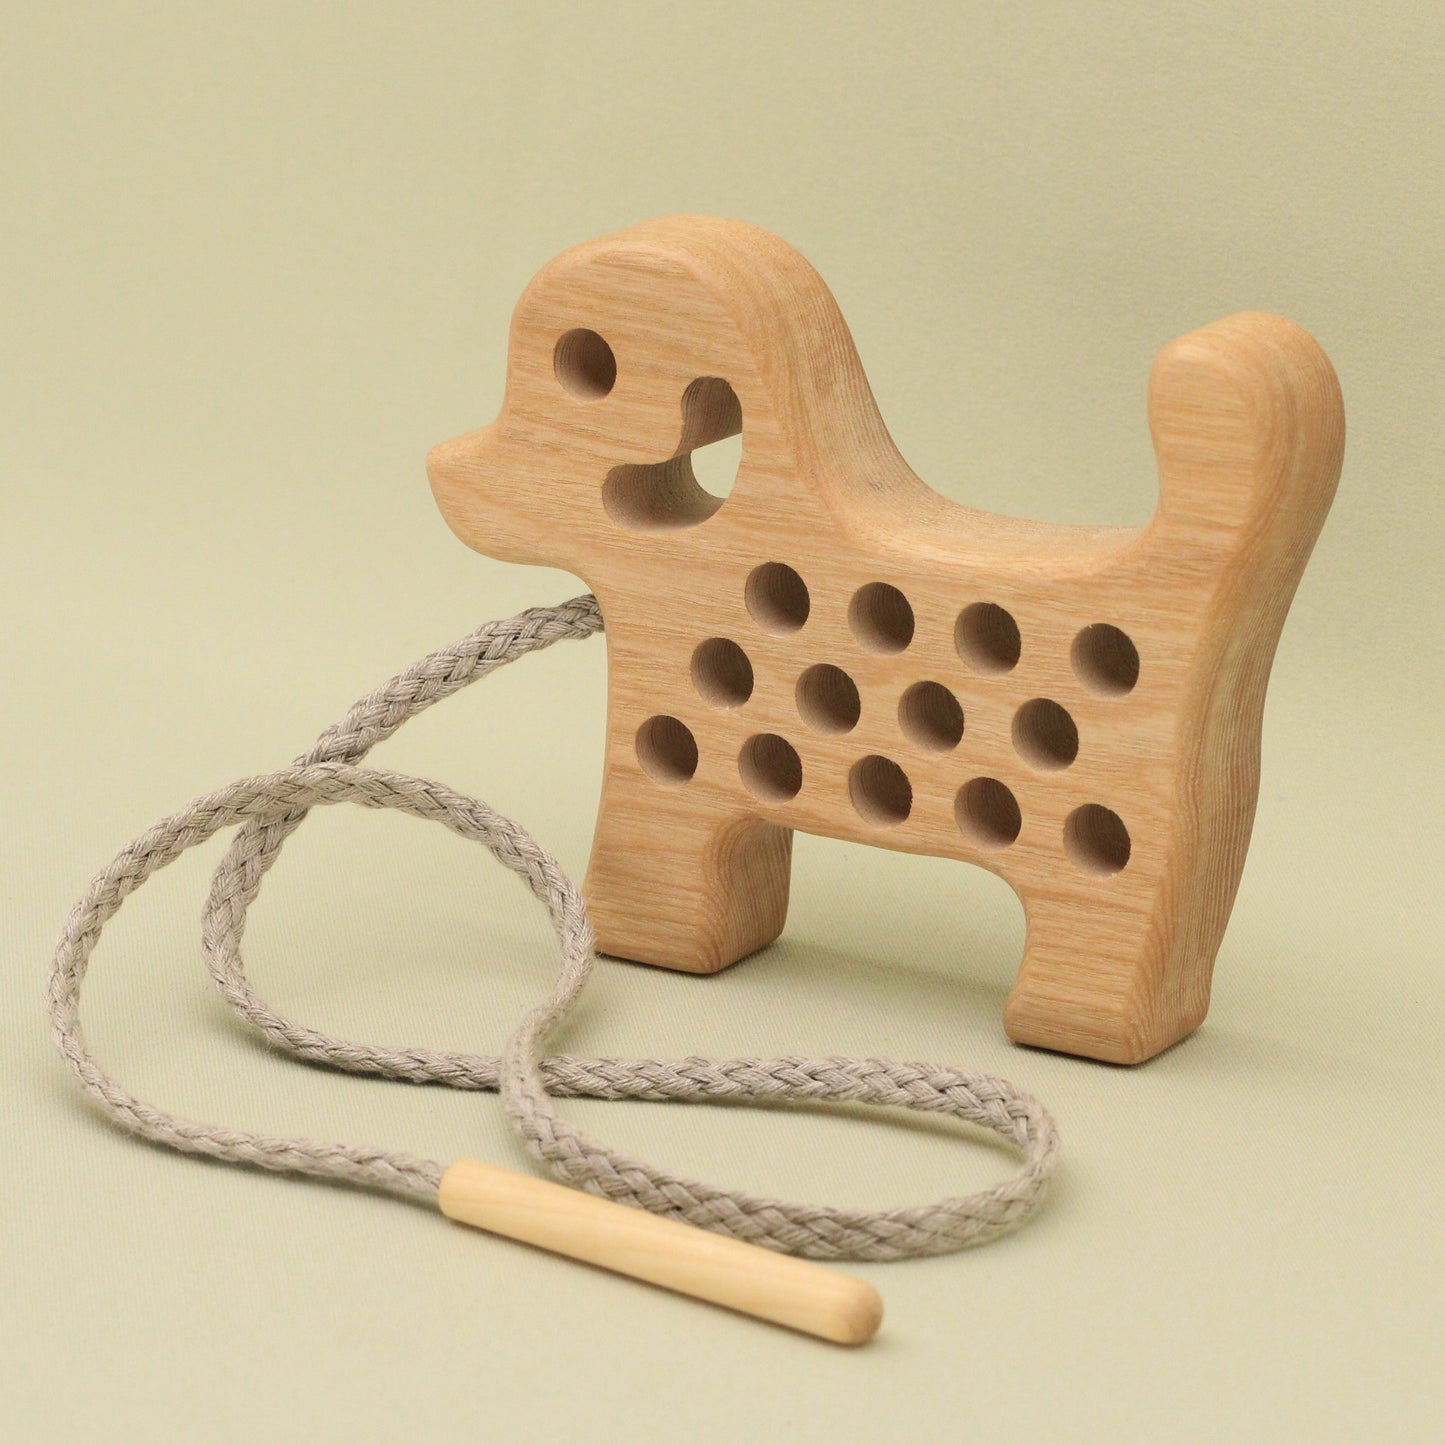 Lotes Toys Natural Wooden Threading Lacing Dog TT15